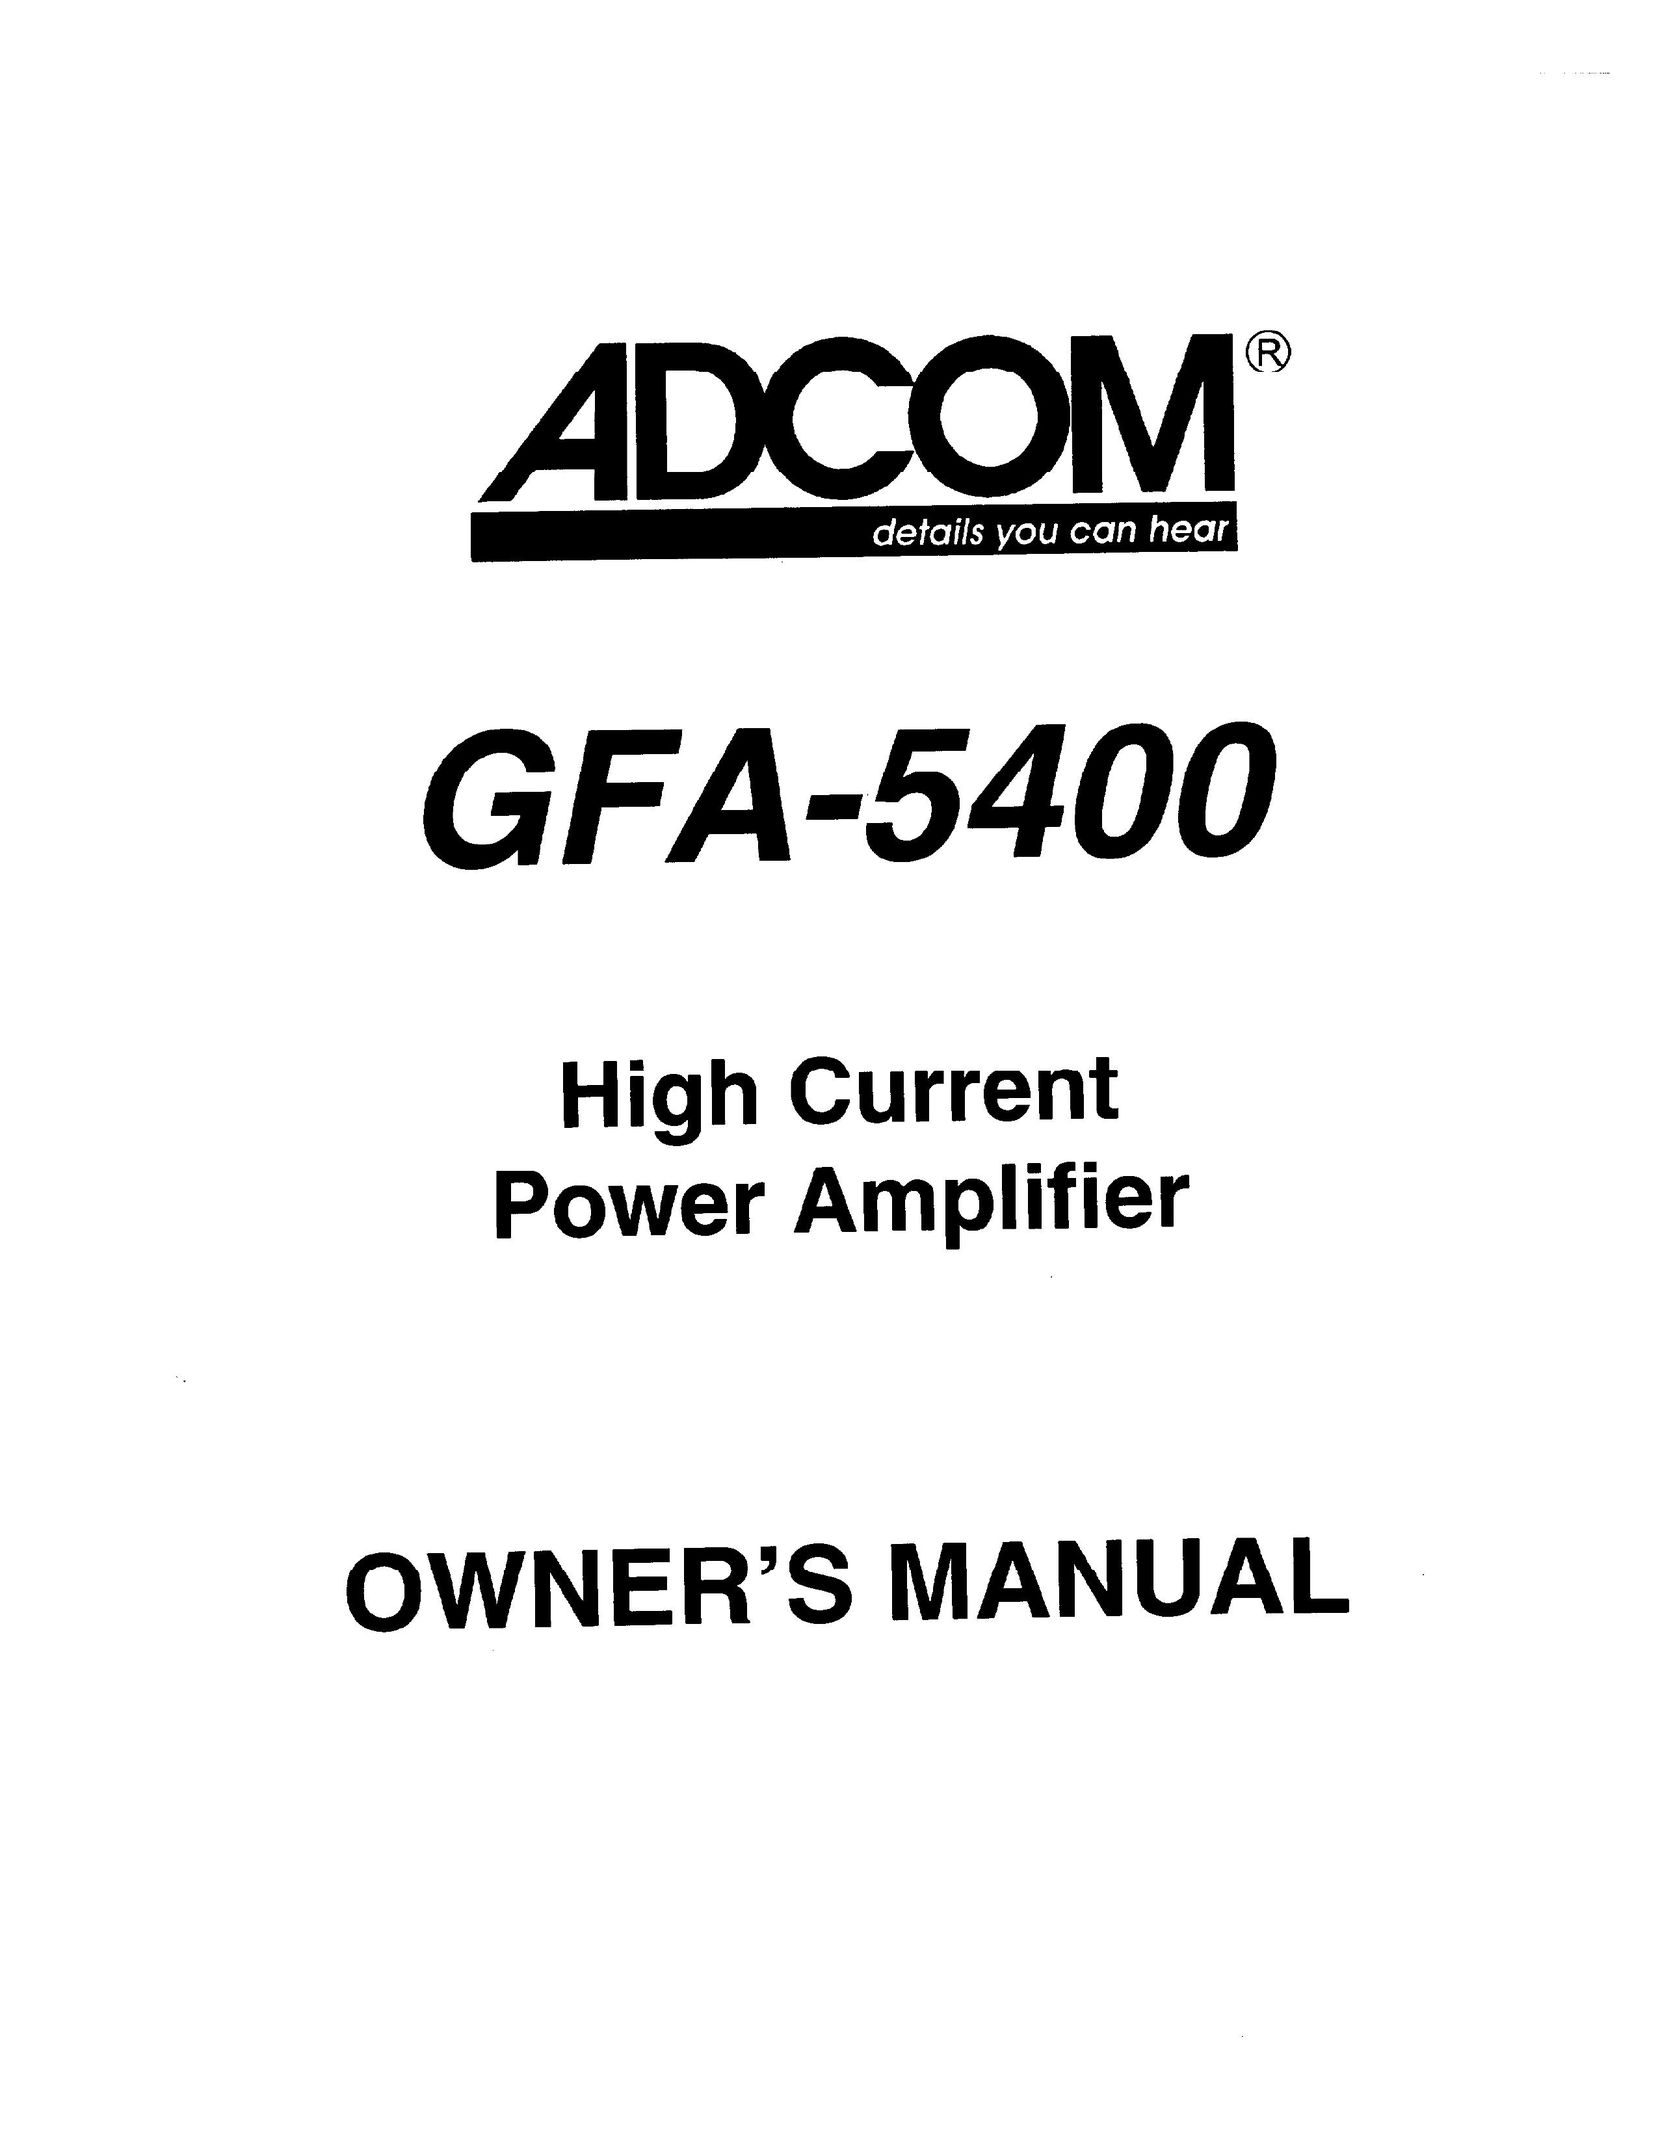 Adcom GFA-5400 Stereo Amplifier User Manual (Page 1)